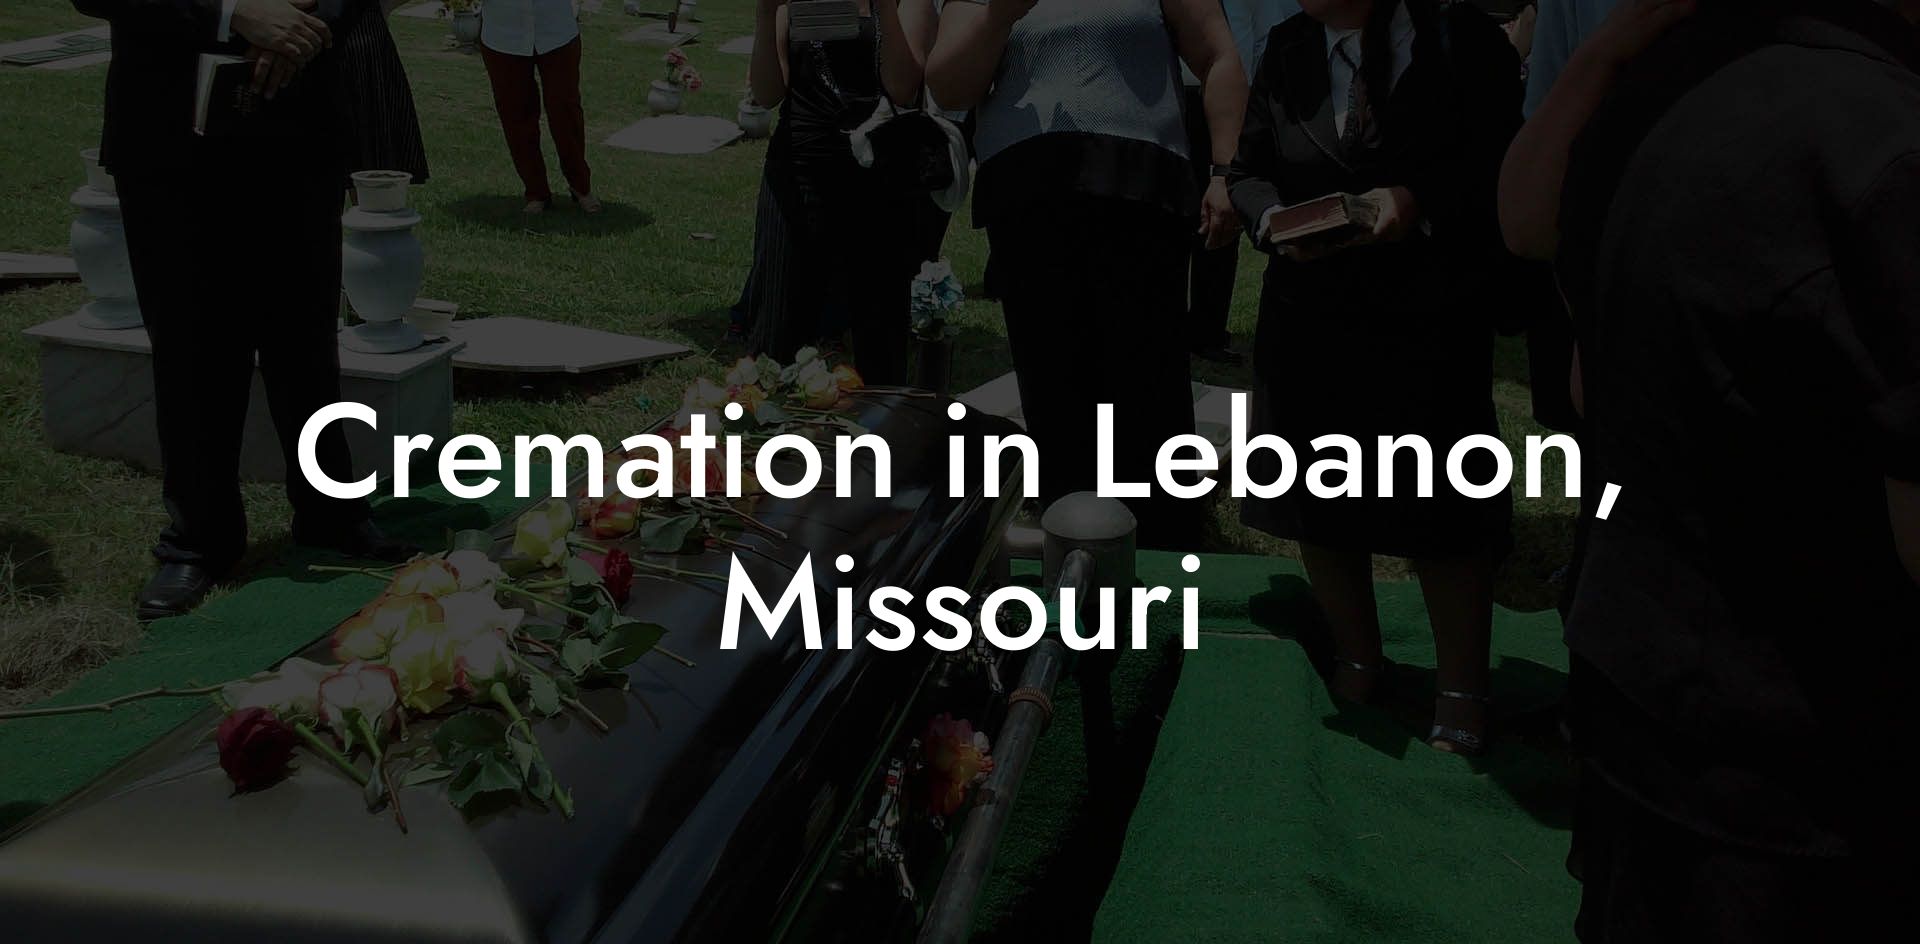 Cremation in Lebanon, Missouri